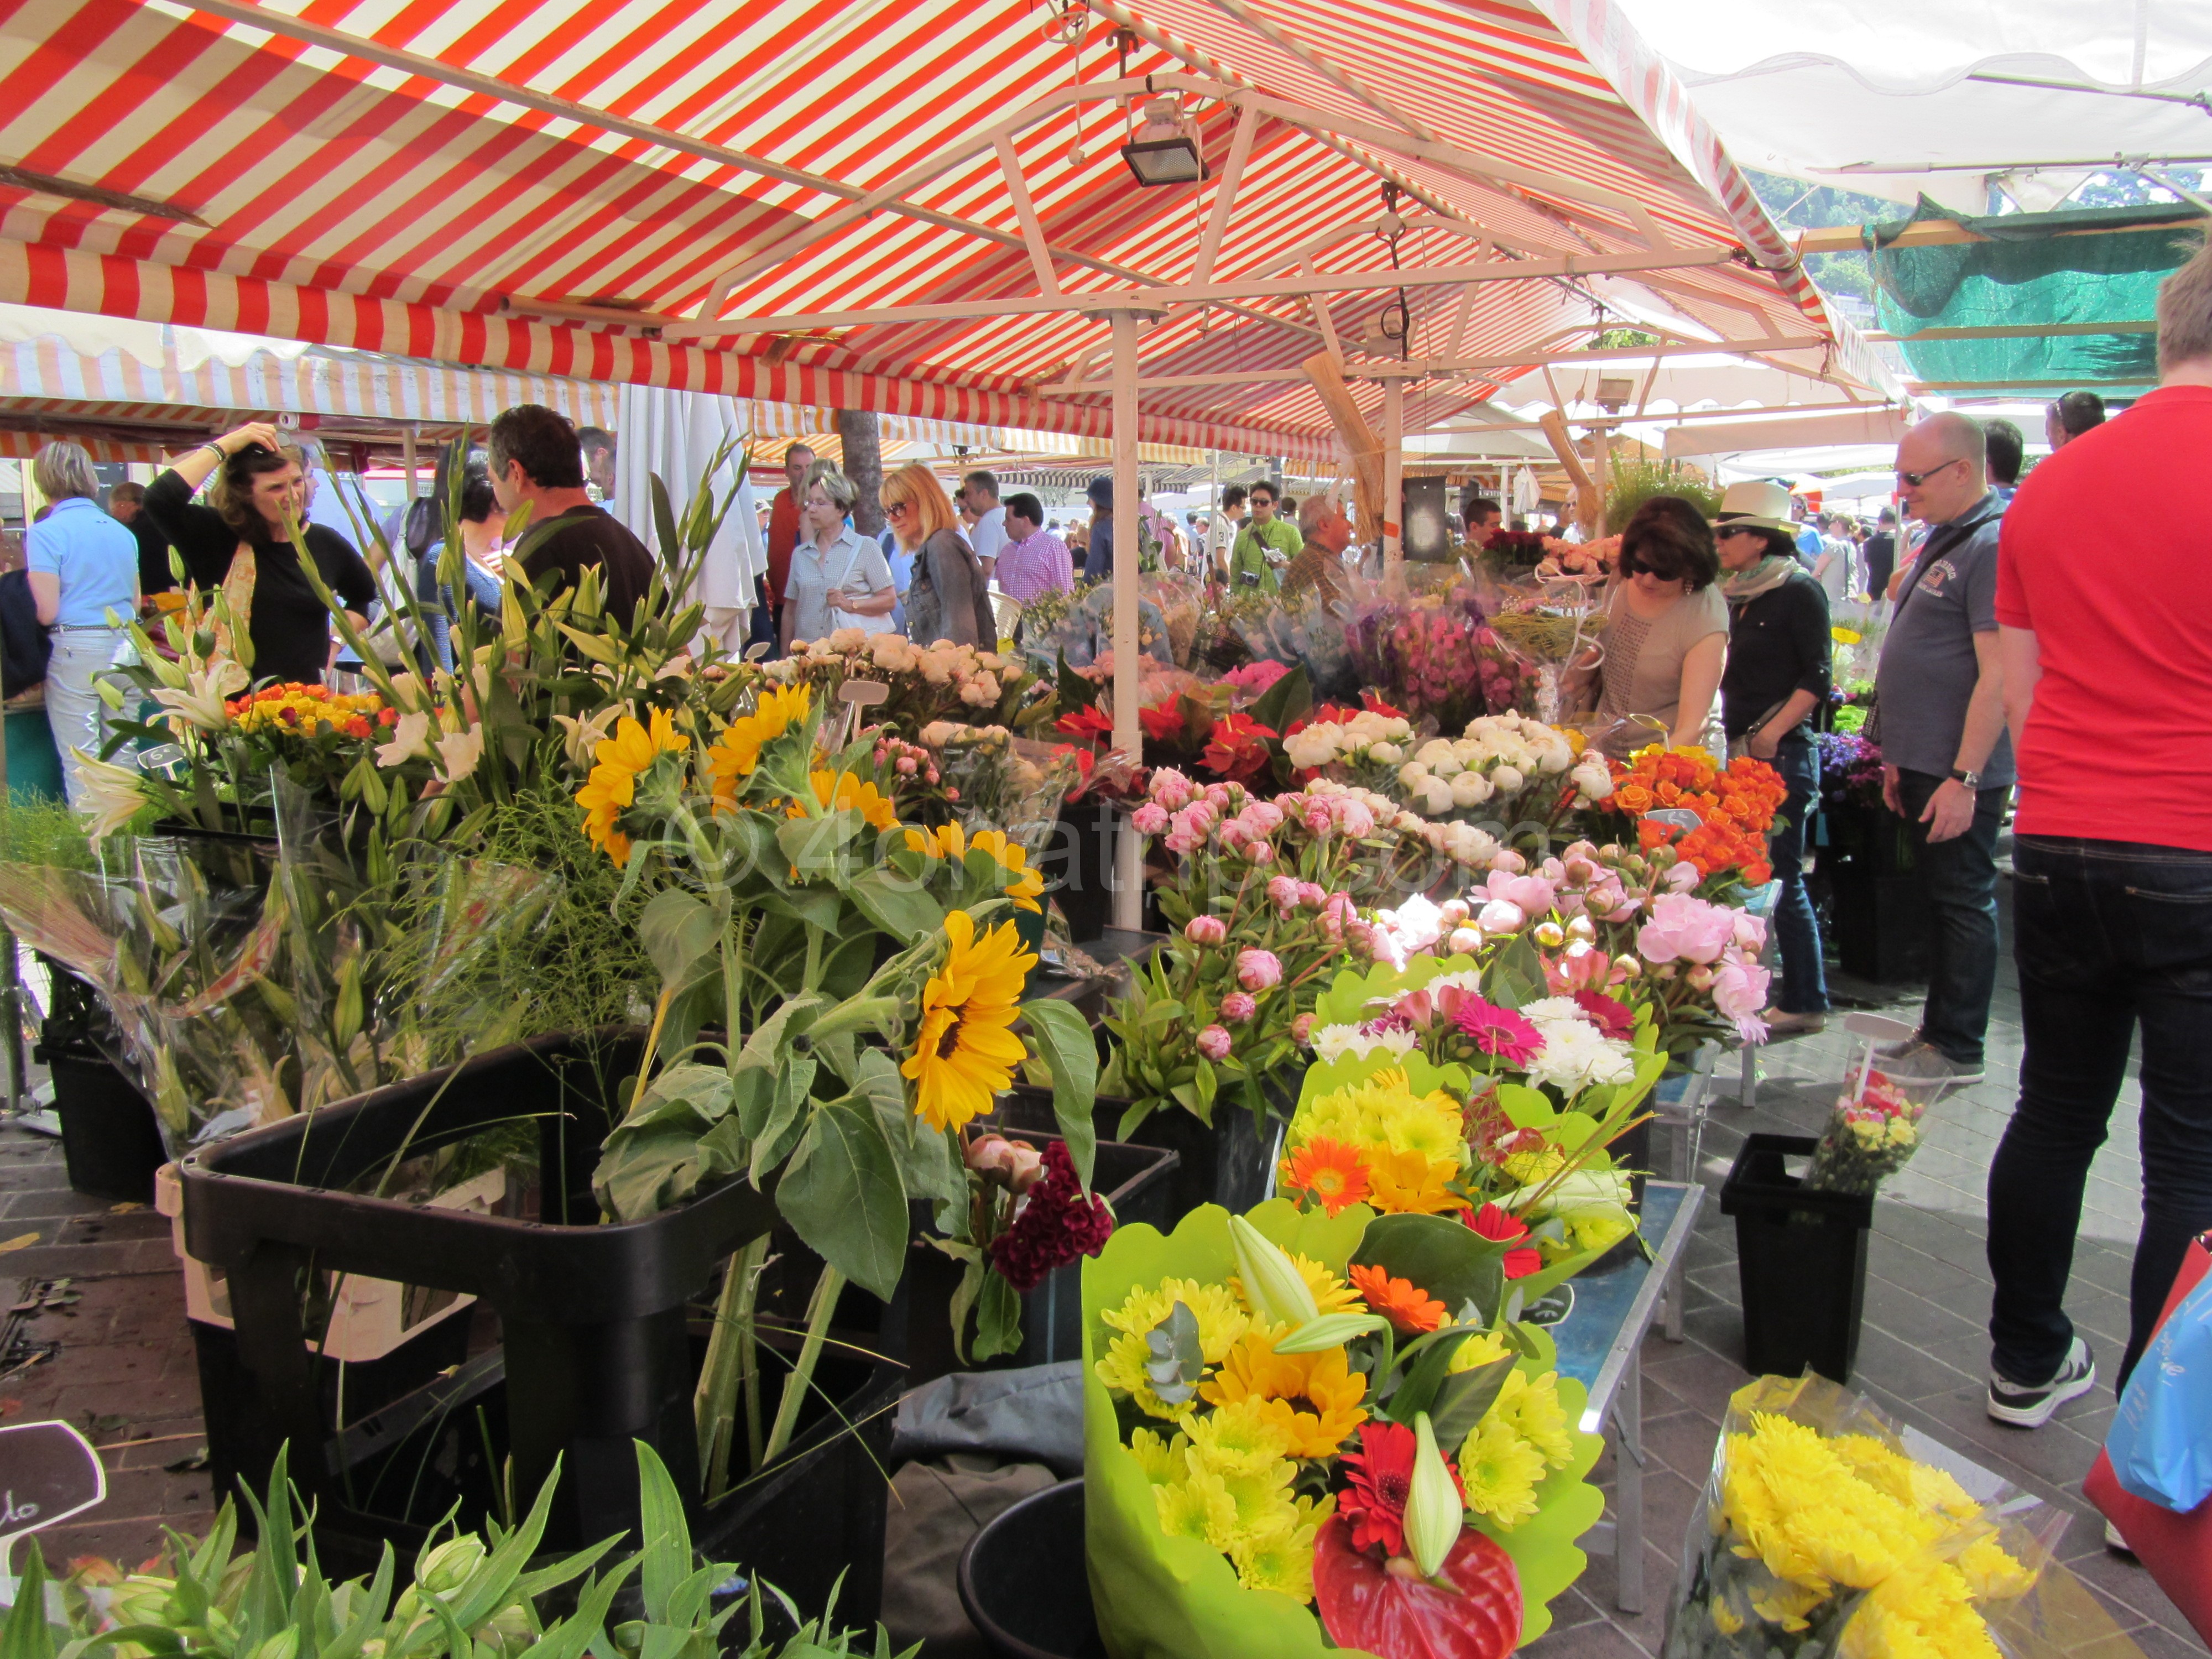 Marche aux Fleurs, The Flower Market in Nice France